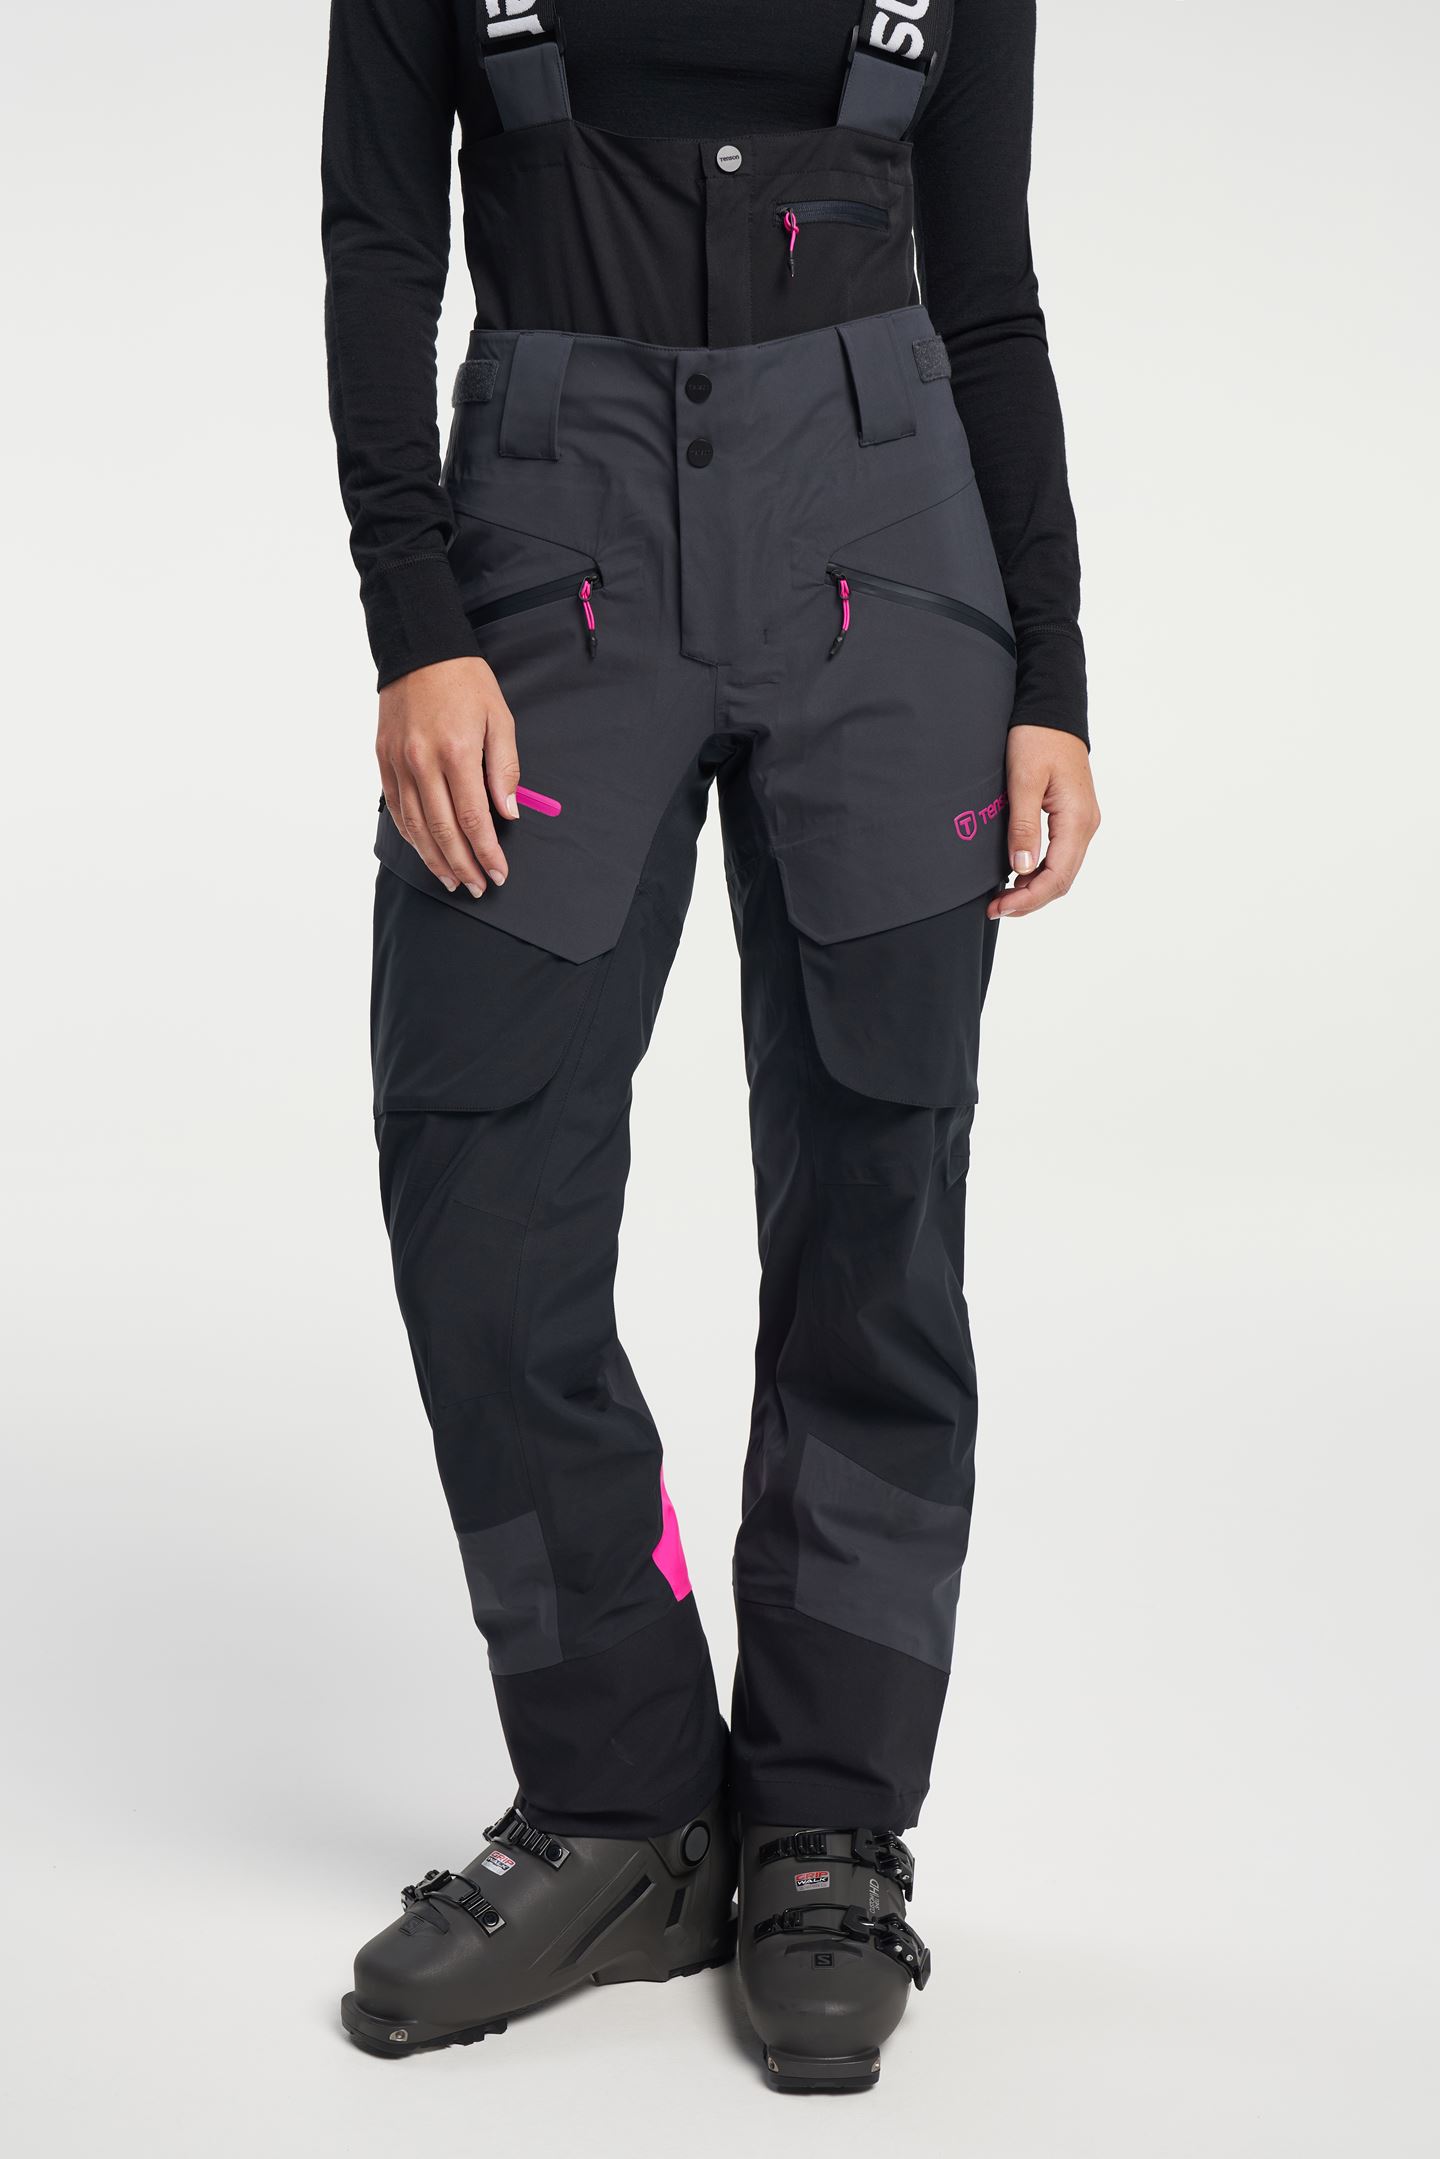 Tour Softshell Pants - Ski Touring Softshell Trousers for Women - Blue  Graphite